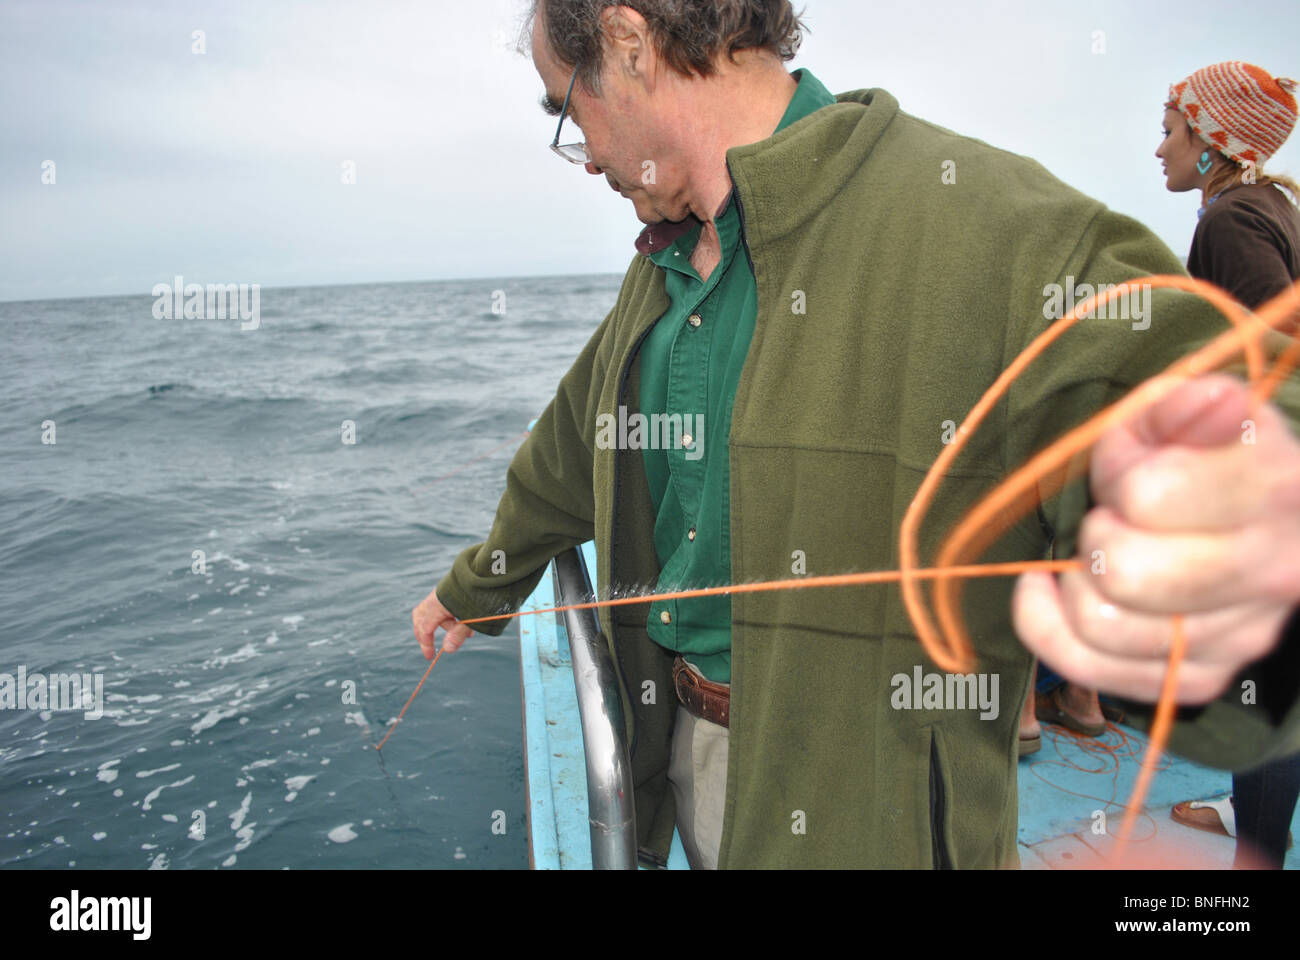 https://c8.alamy.com/comp/BNFHN2/man-fishing-for-mackerel-off-a-boat-near-lyme-regis-dorset-england-BNFHN2.jpg